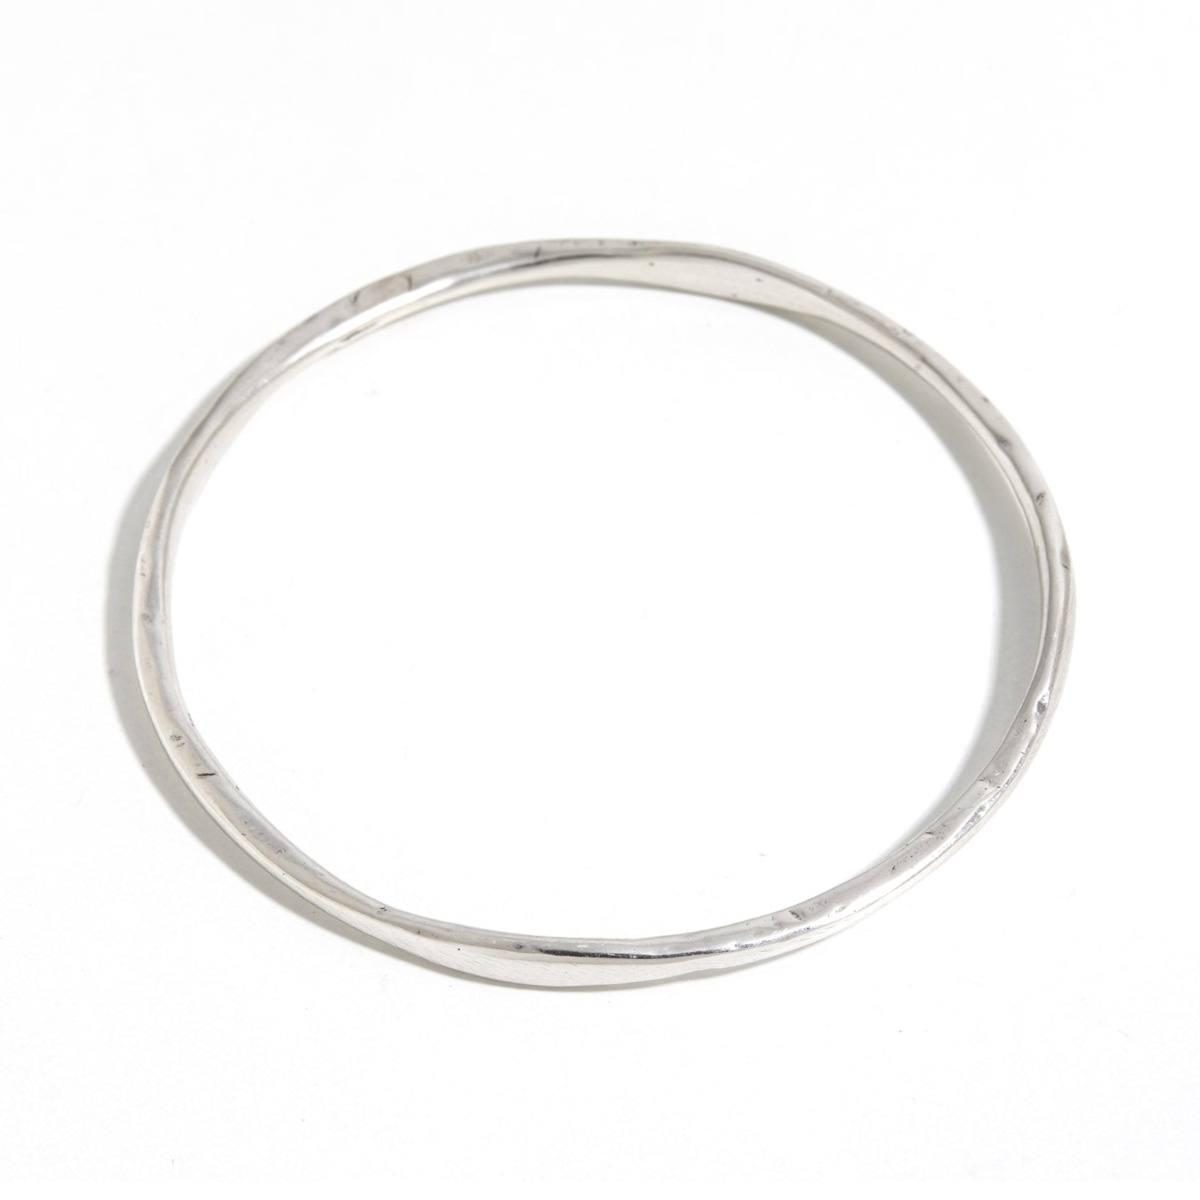 Danon Jewelry "Dune" Silver-Plated Bracelet - 1